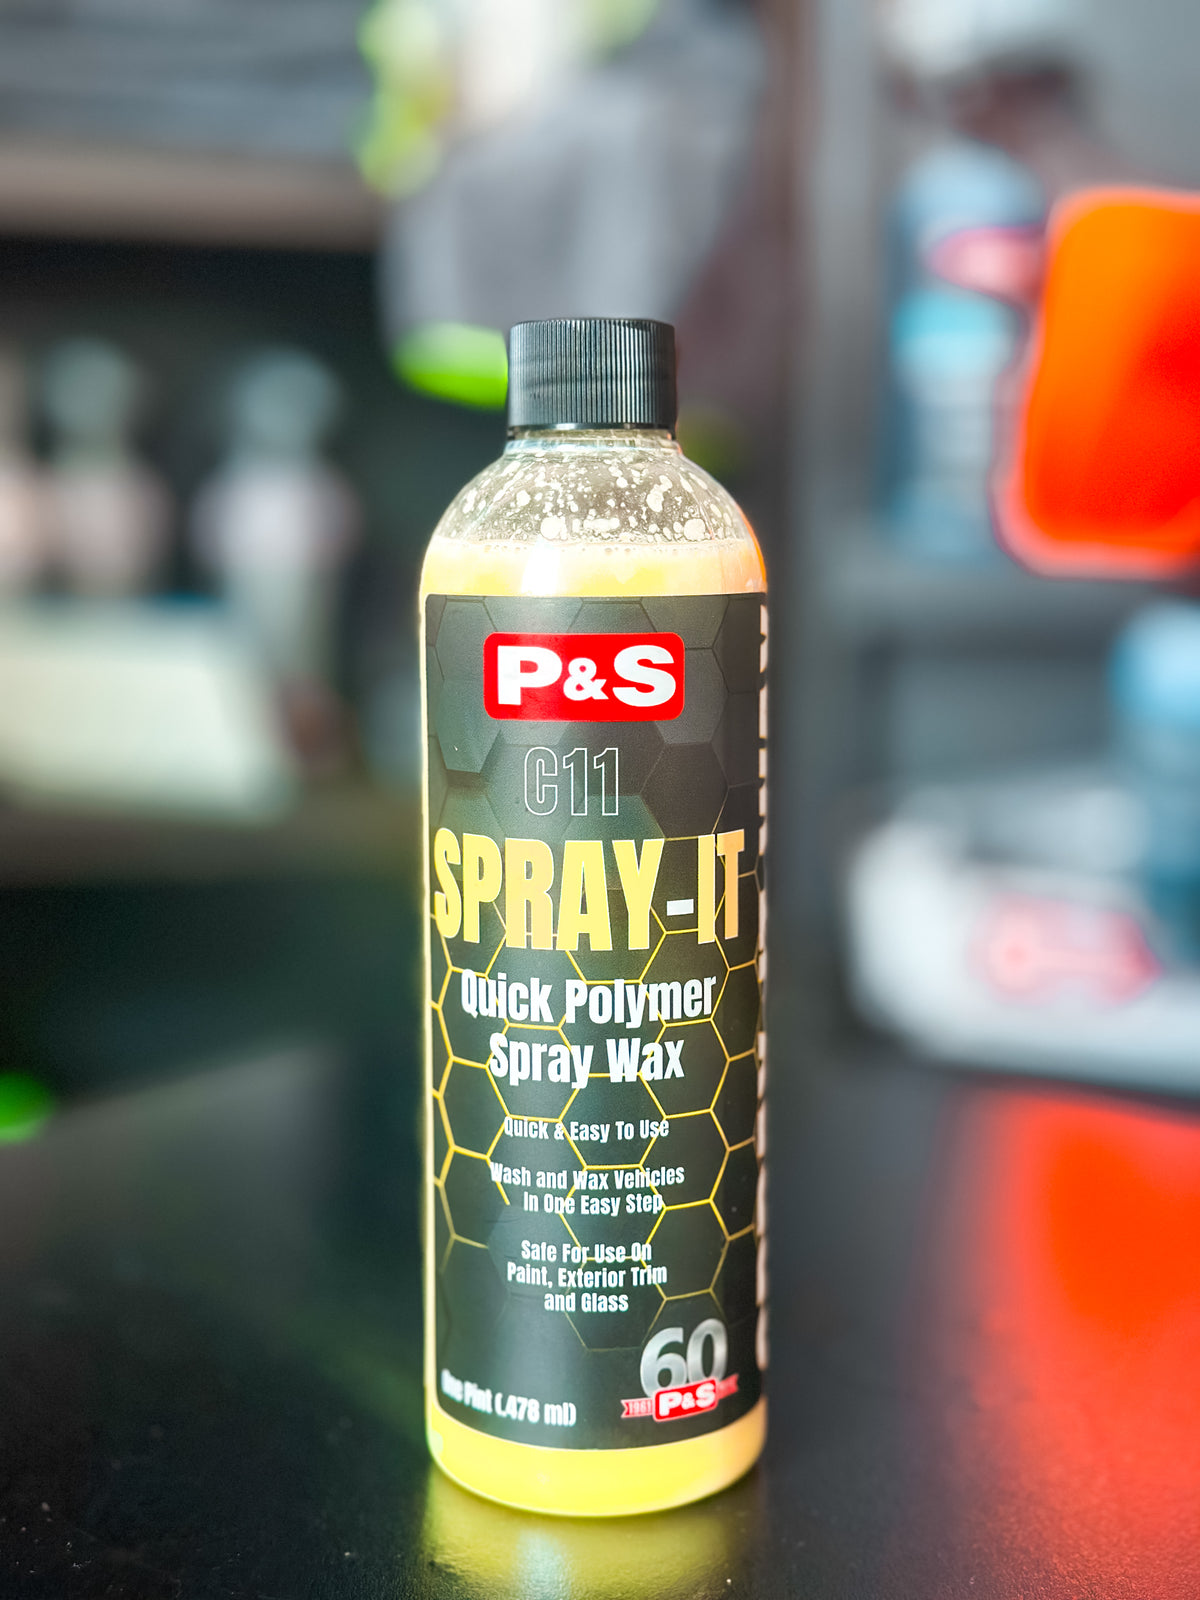 Spray-It Quick Polymer Spray Wax